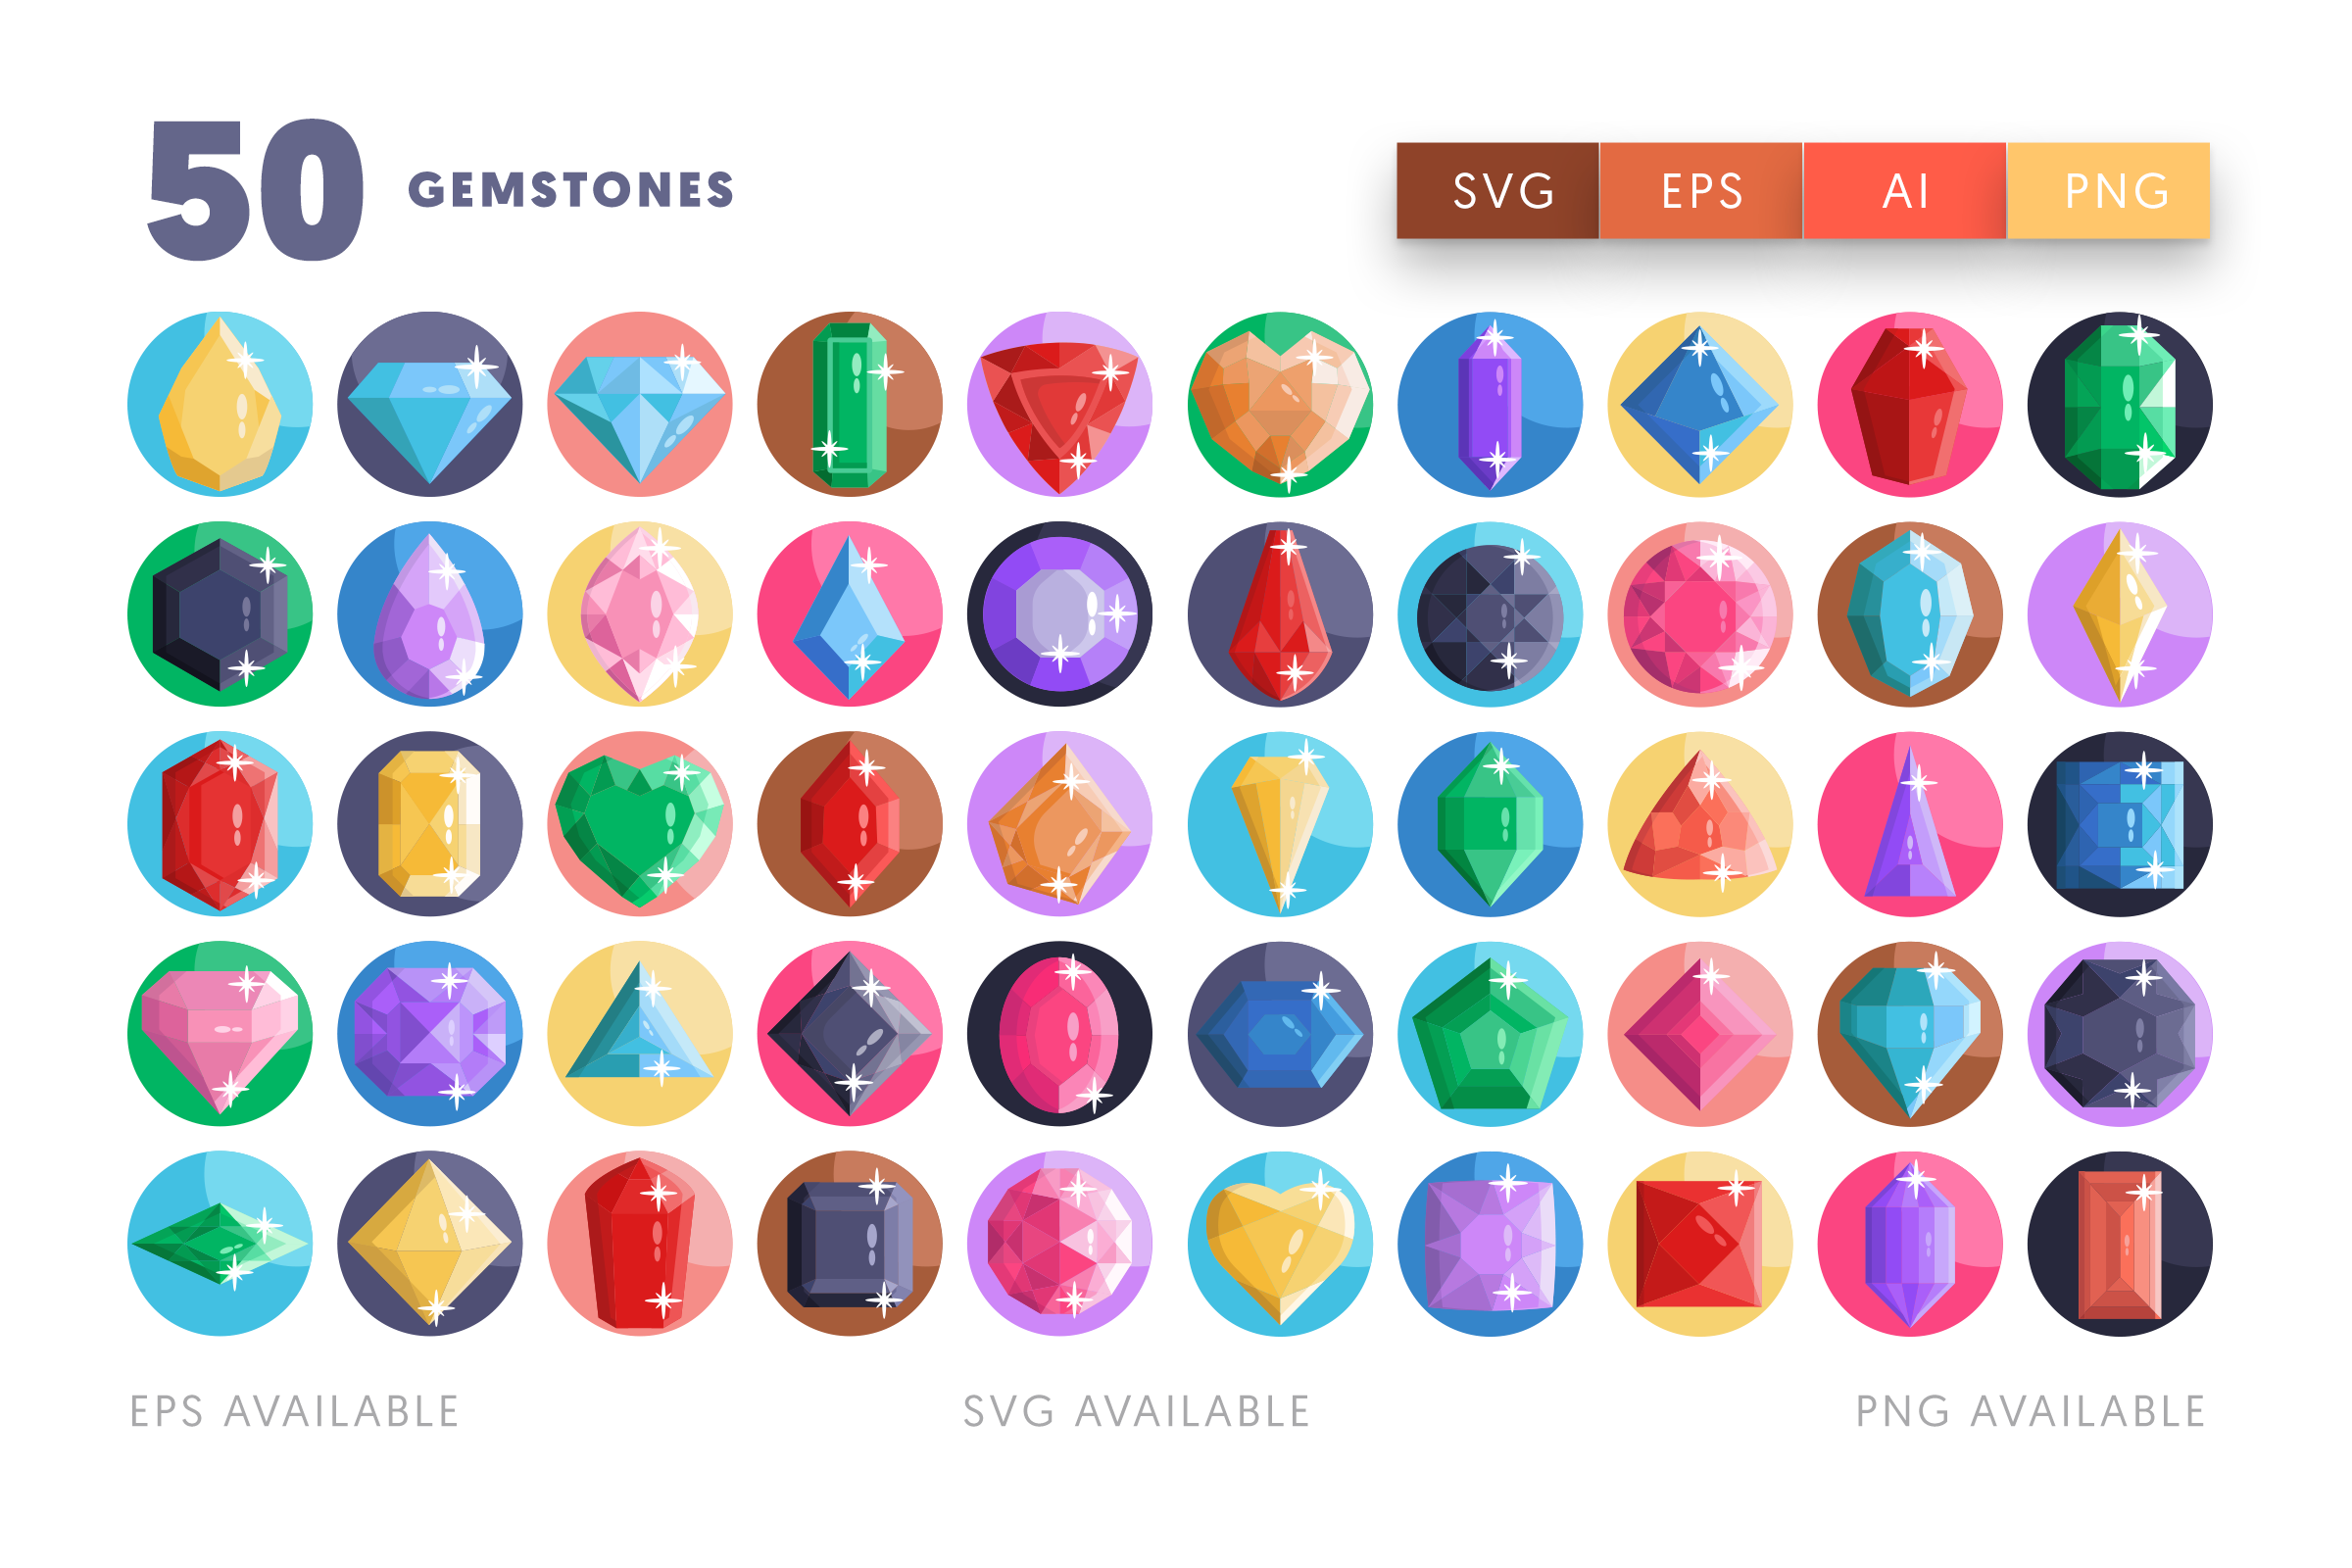 Gemstones icons png/svg/eps